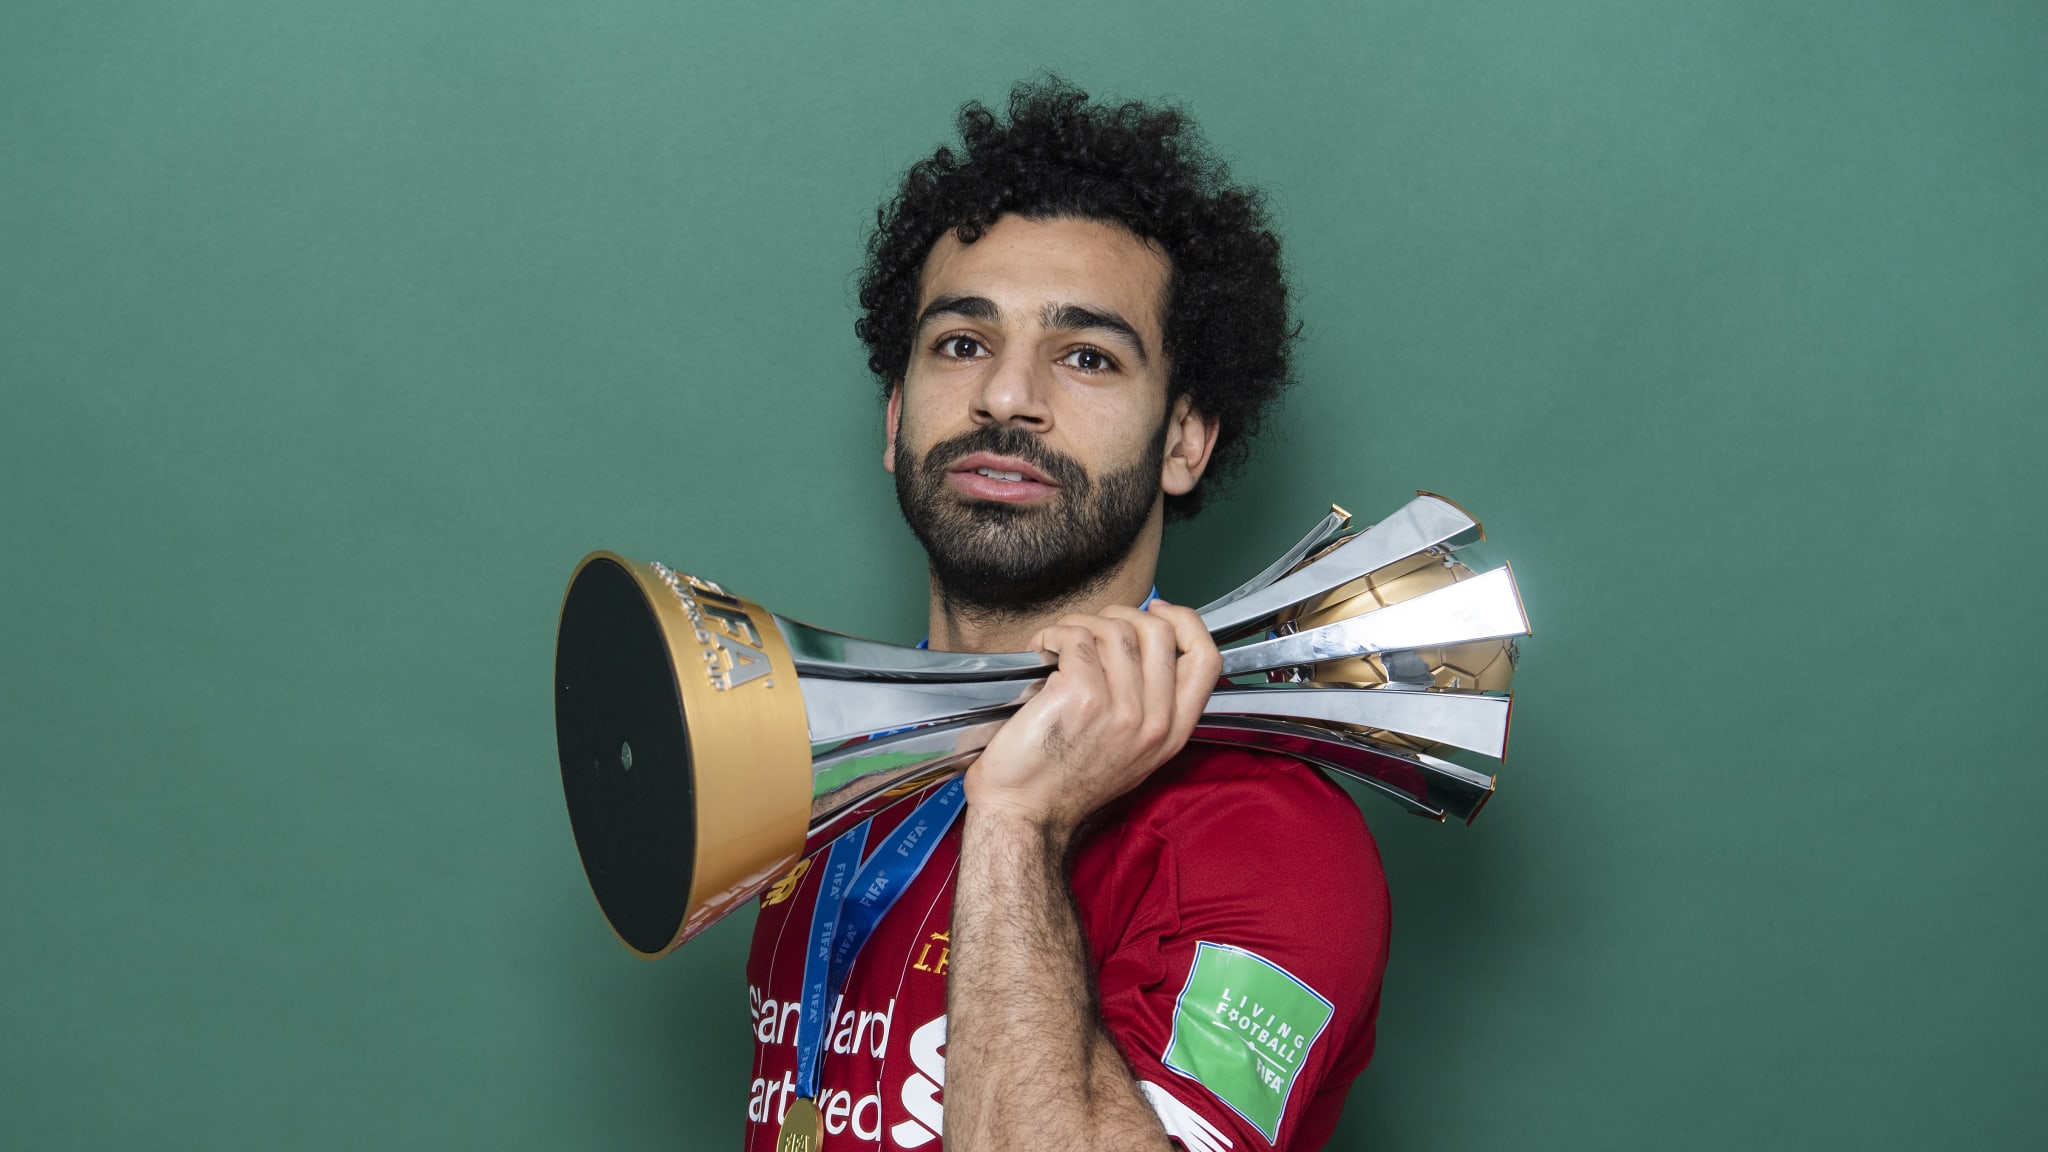 Video - How Salah won FIFA's ‘Player of the Tournament’ award without